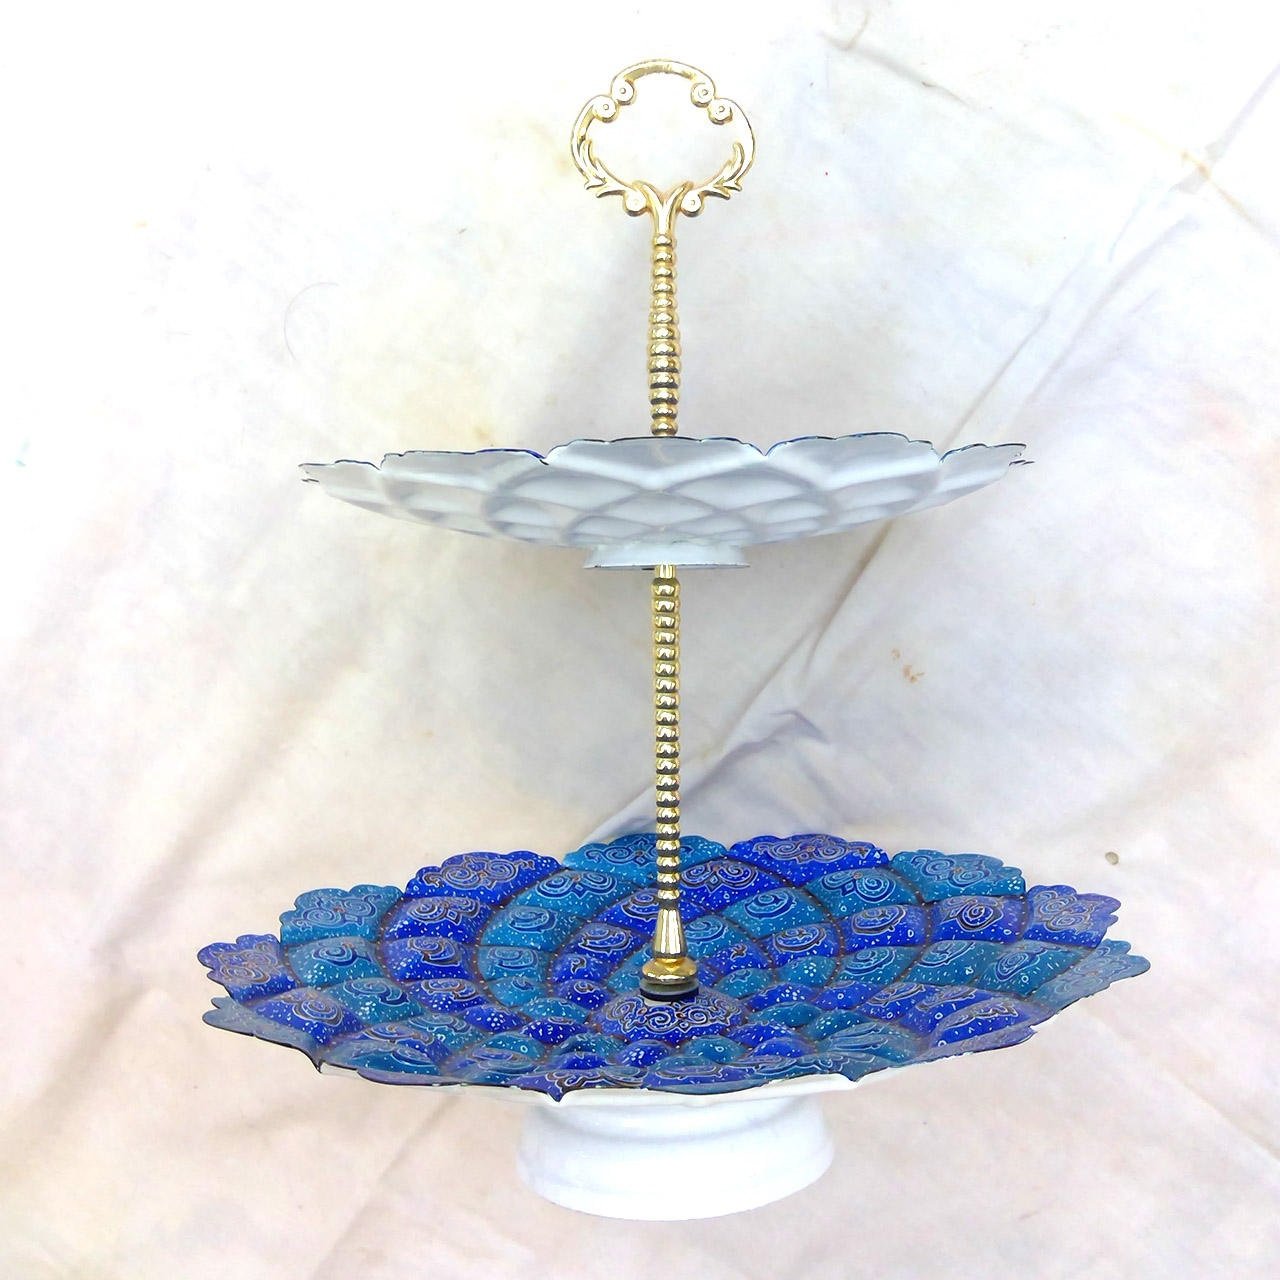 Enamel Handicraft Copper Dishes Model Conf30-2S-6,blue enamel,handicrafts,handicrafts dishes